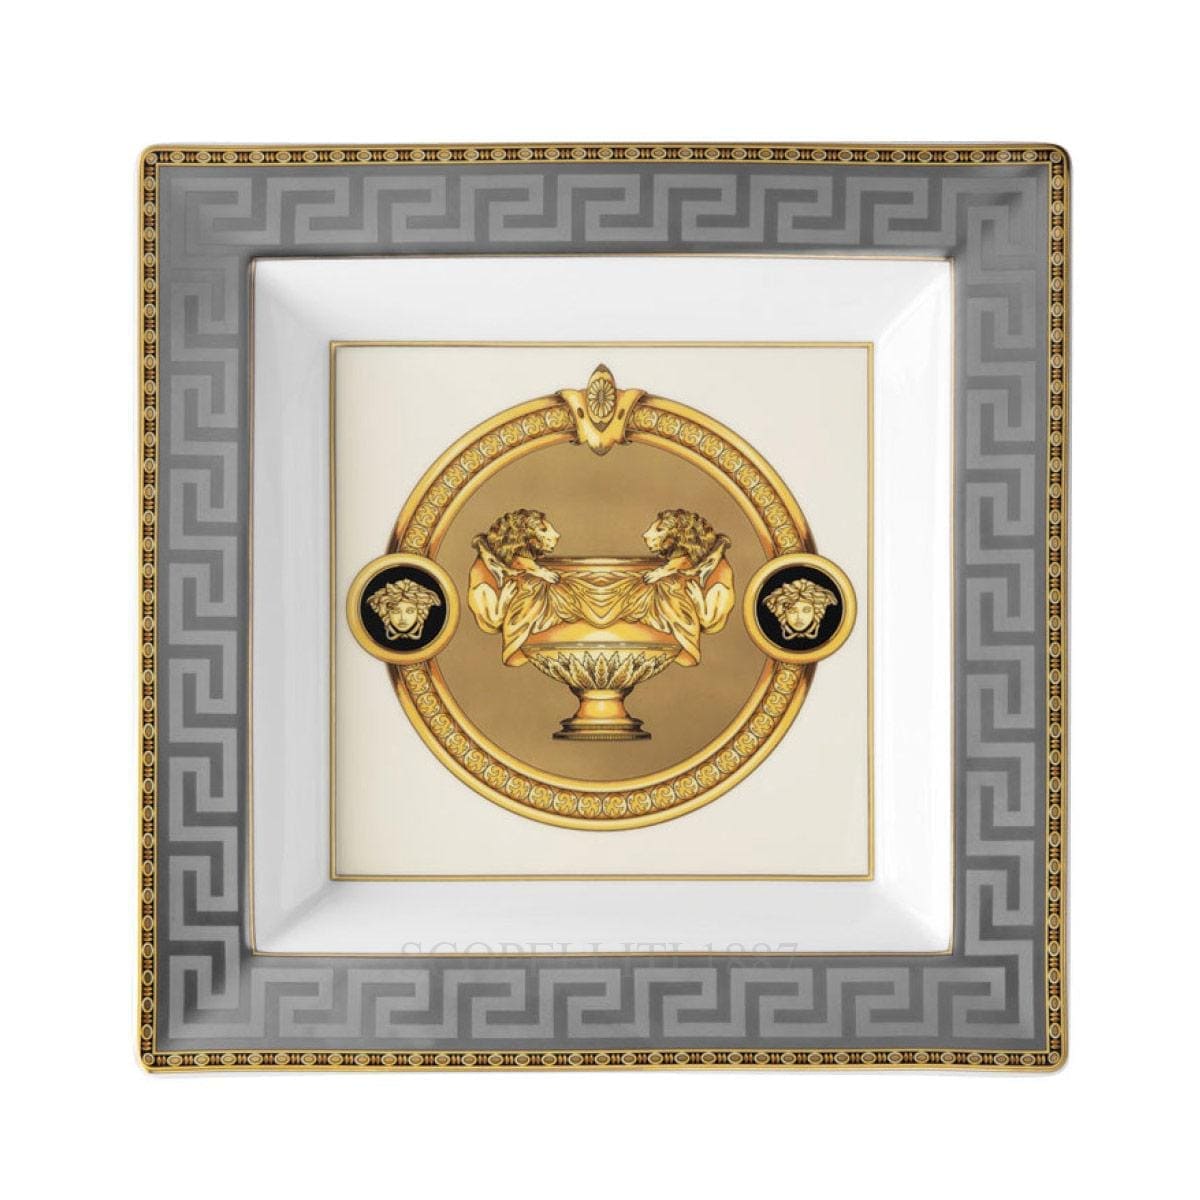 Versace Prestige Gala Square Dish 22 cm by Rosenthal